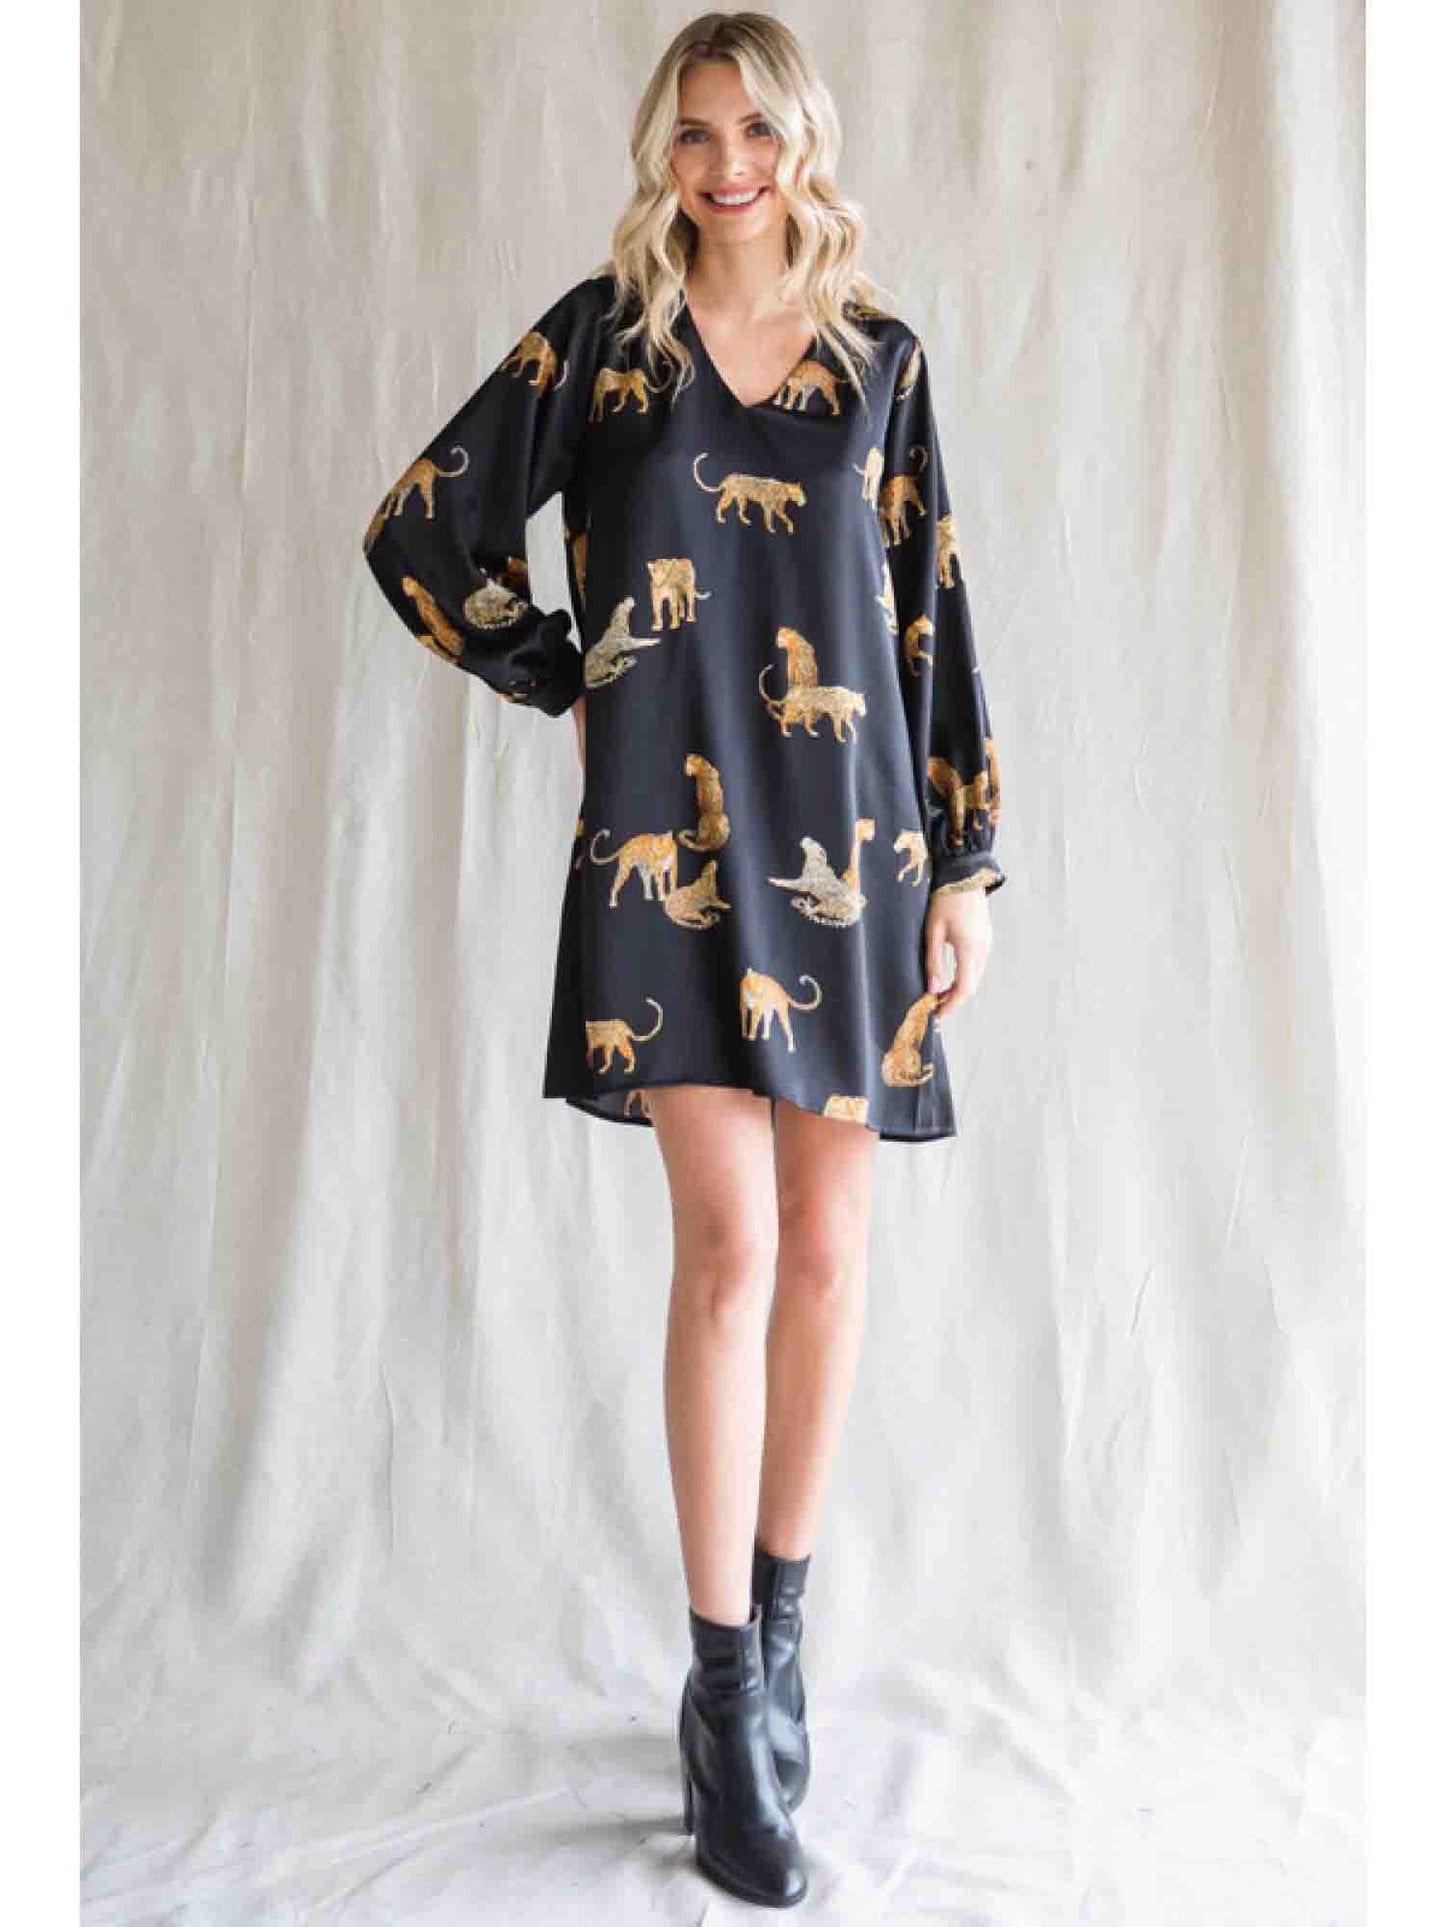 Cheetah Animal Print LSL Dress in Black by Jodifl